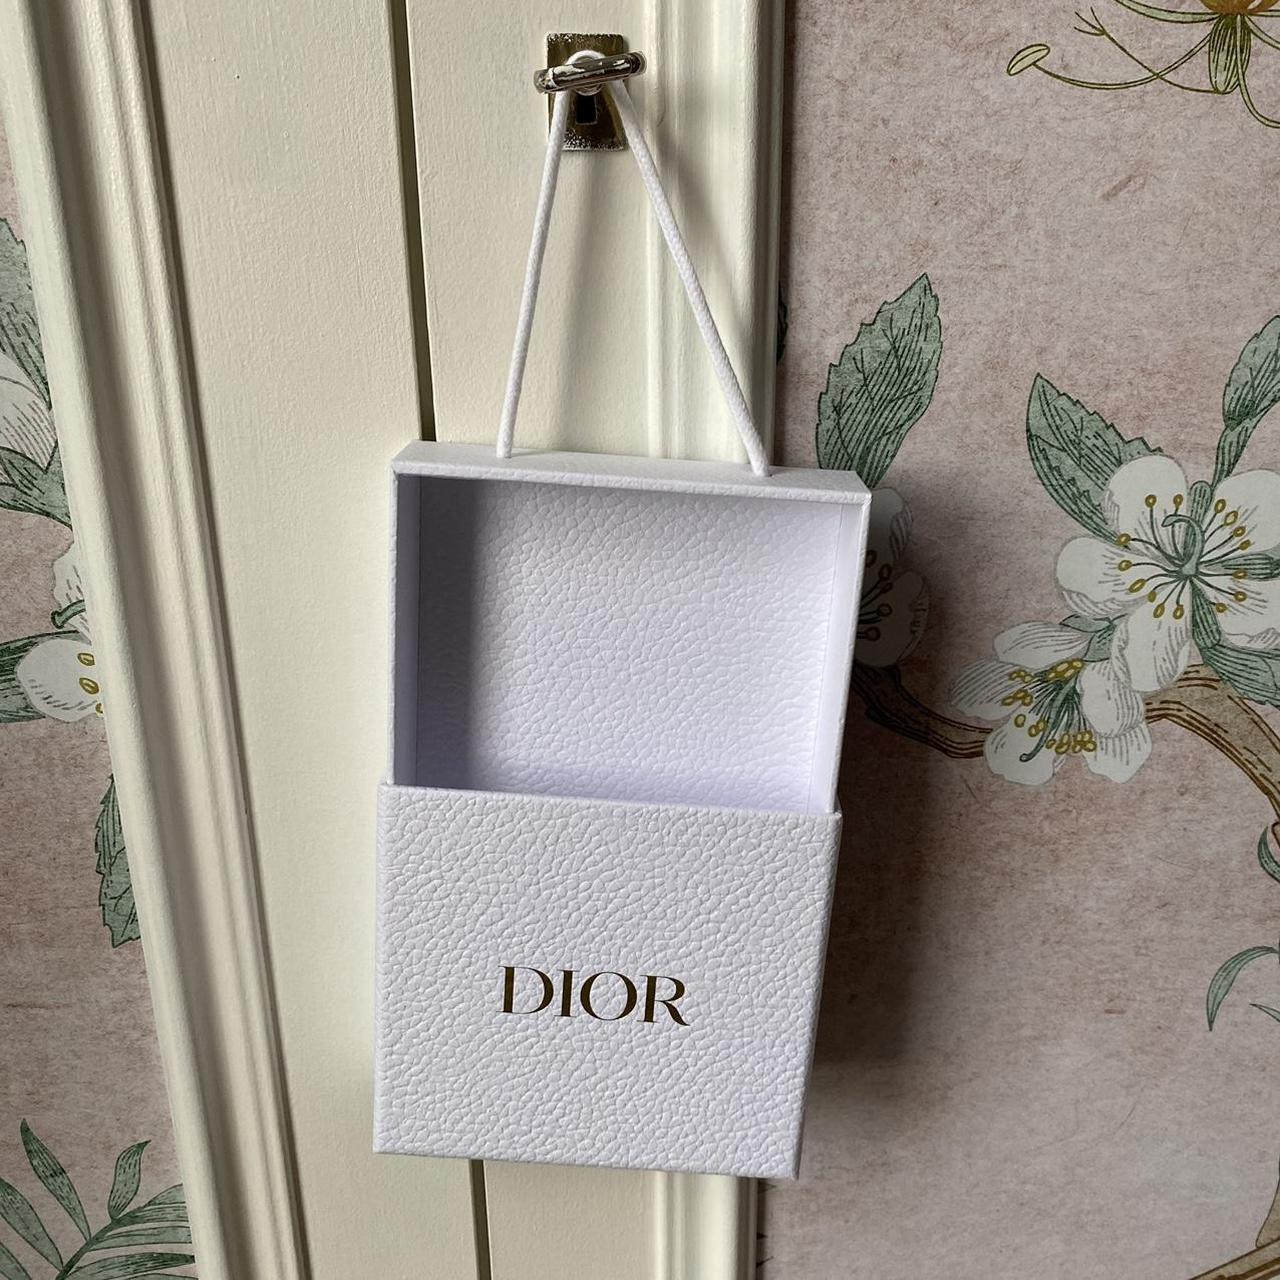 Dior gift receipt . 1pcs only #dior #giftreceipt - Depop